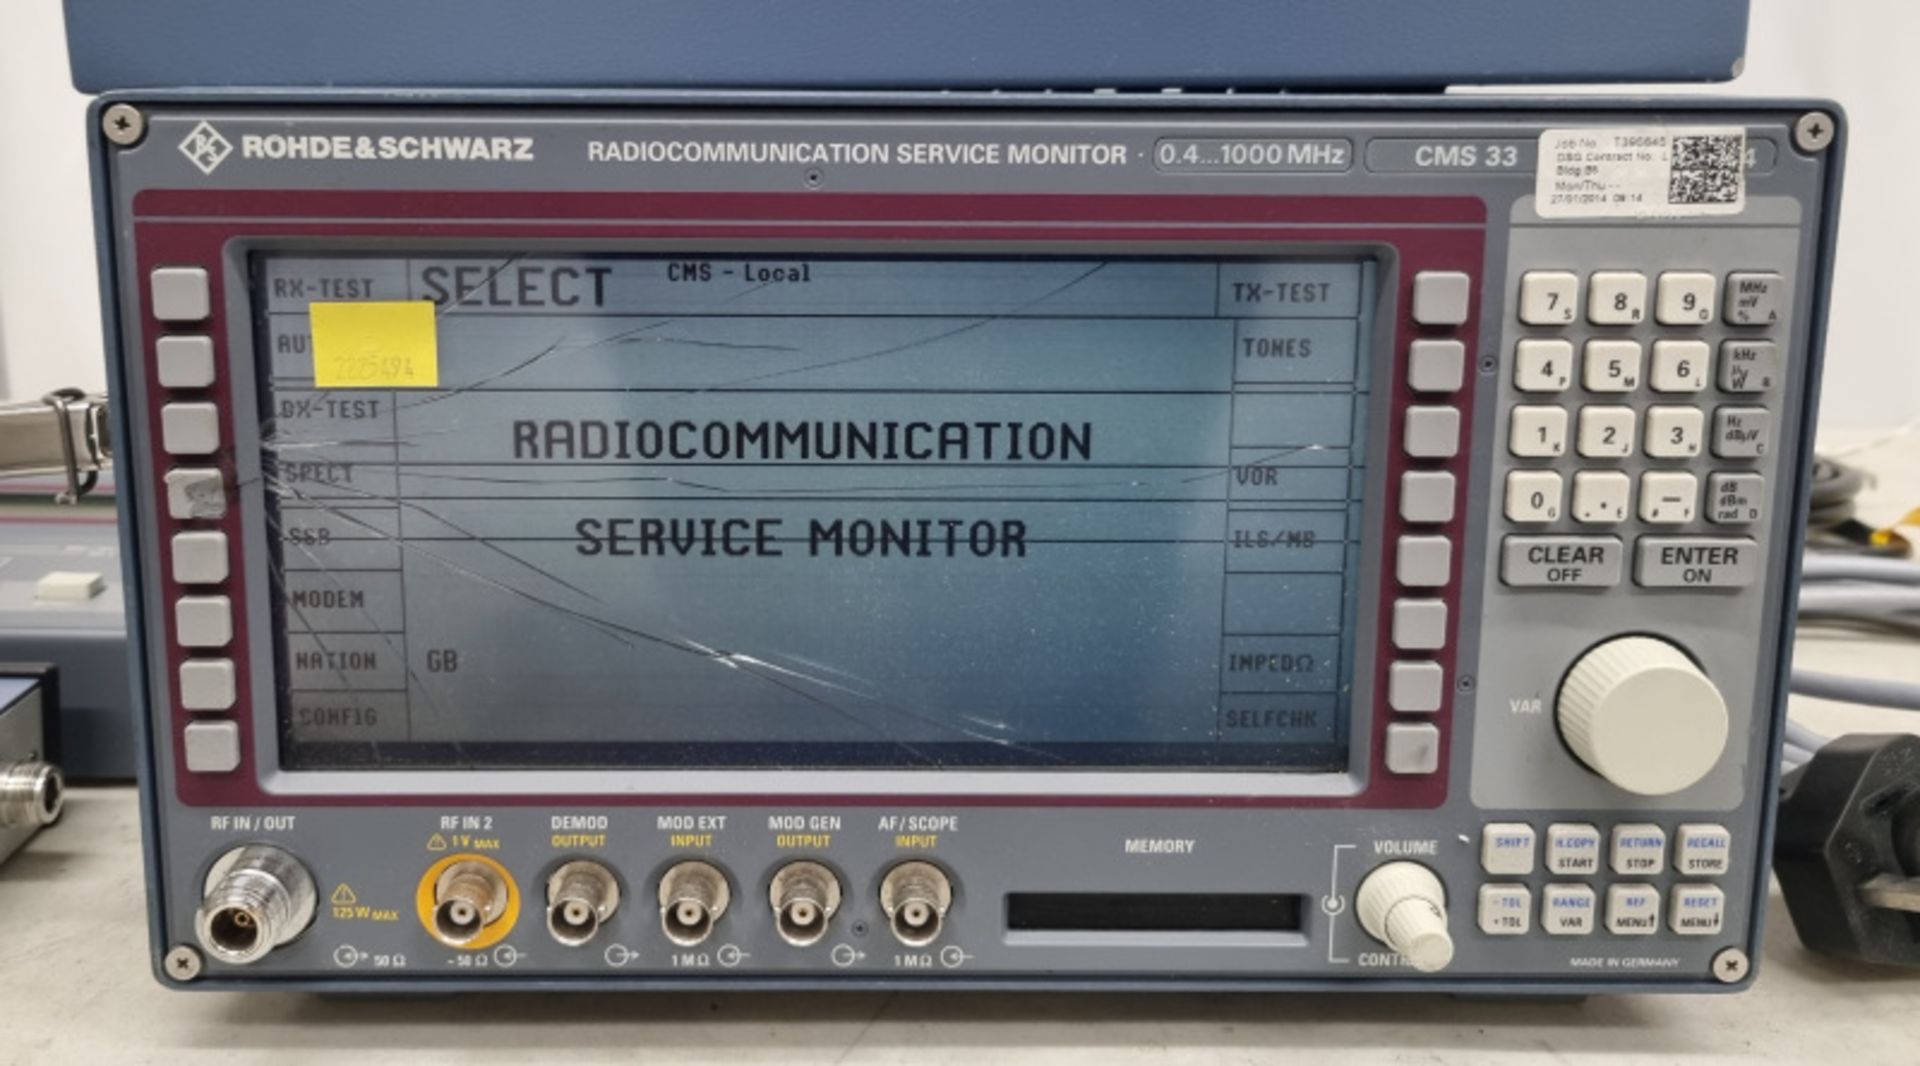 Rohde & Schwarz CMS33 Radiocommunication Service Monitor 0.4 - 1000mhz - 840.0009.34 - Image 4 of 8